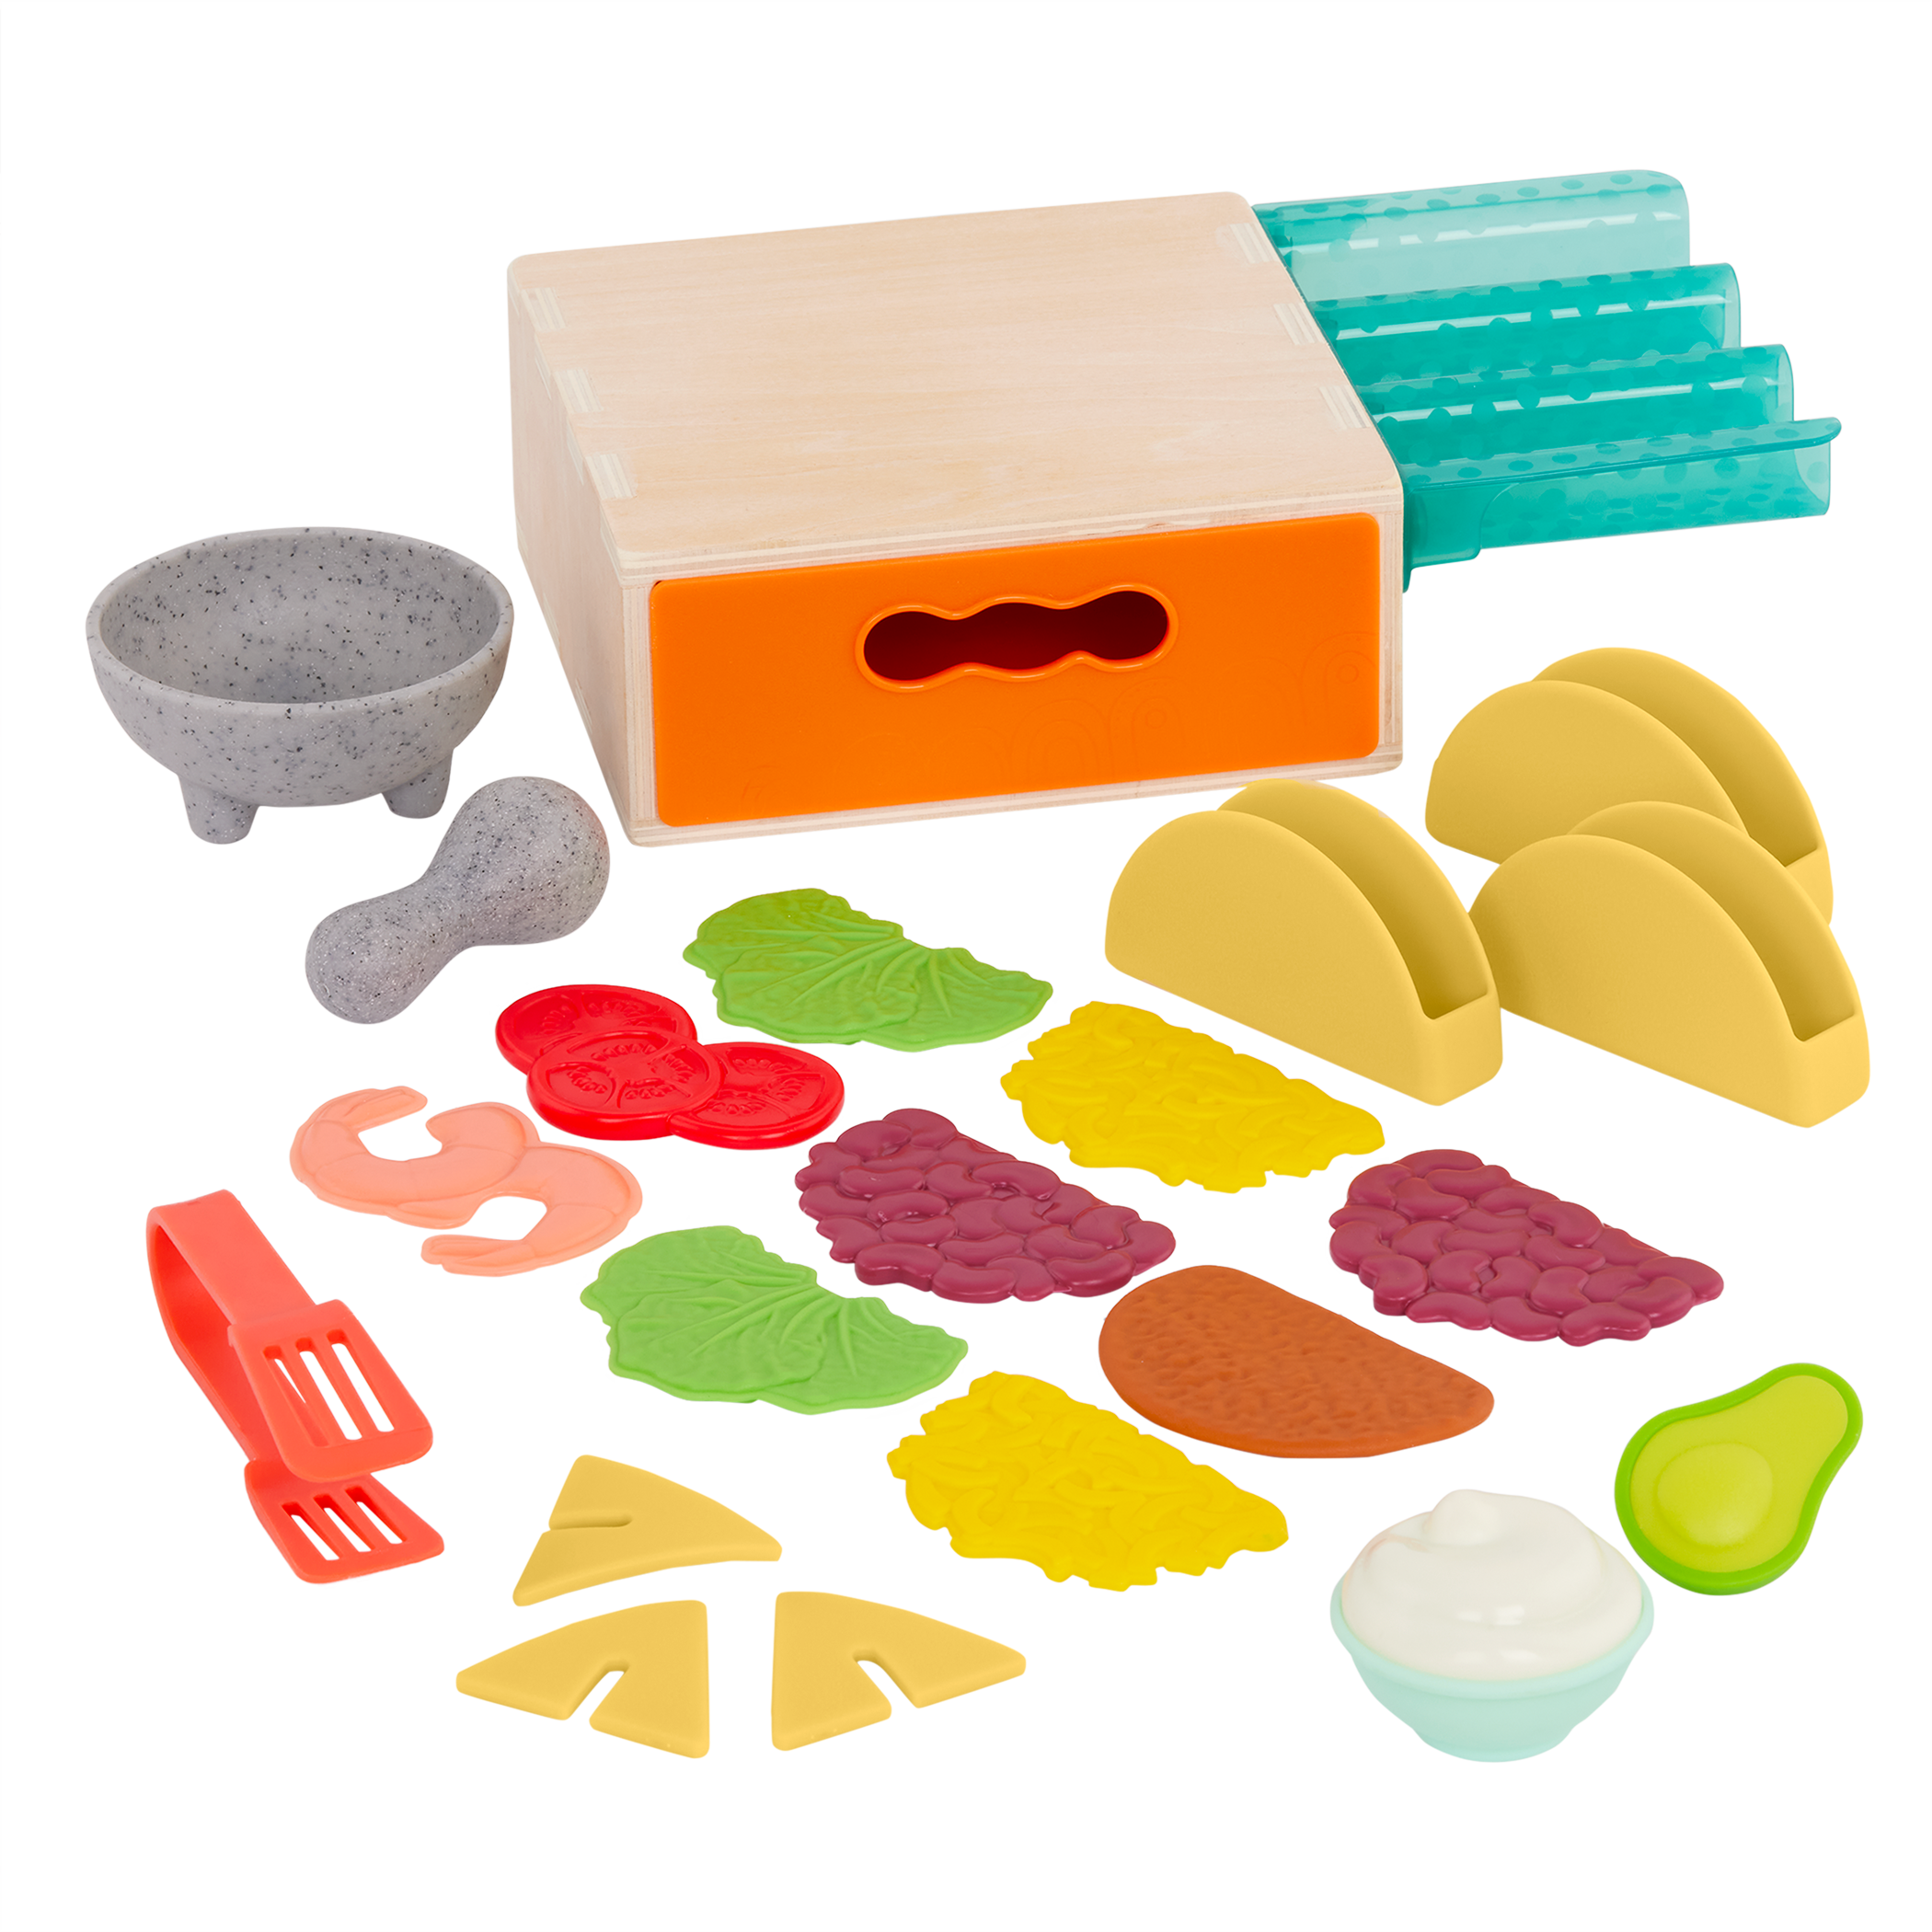 B. toys -Fix 'n' Play Kit - Wooden Tool Box Playset